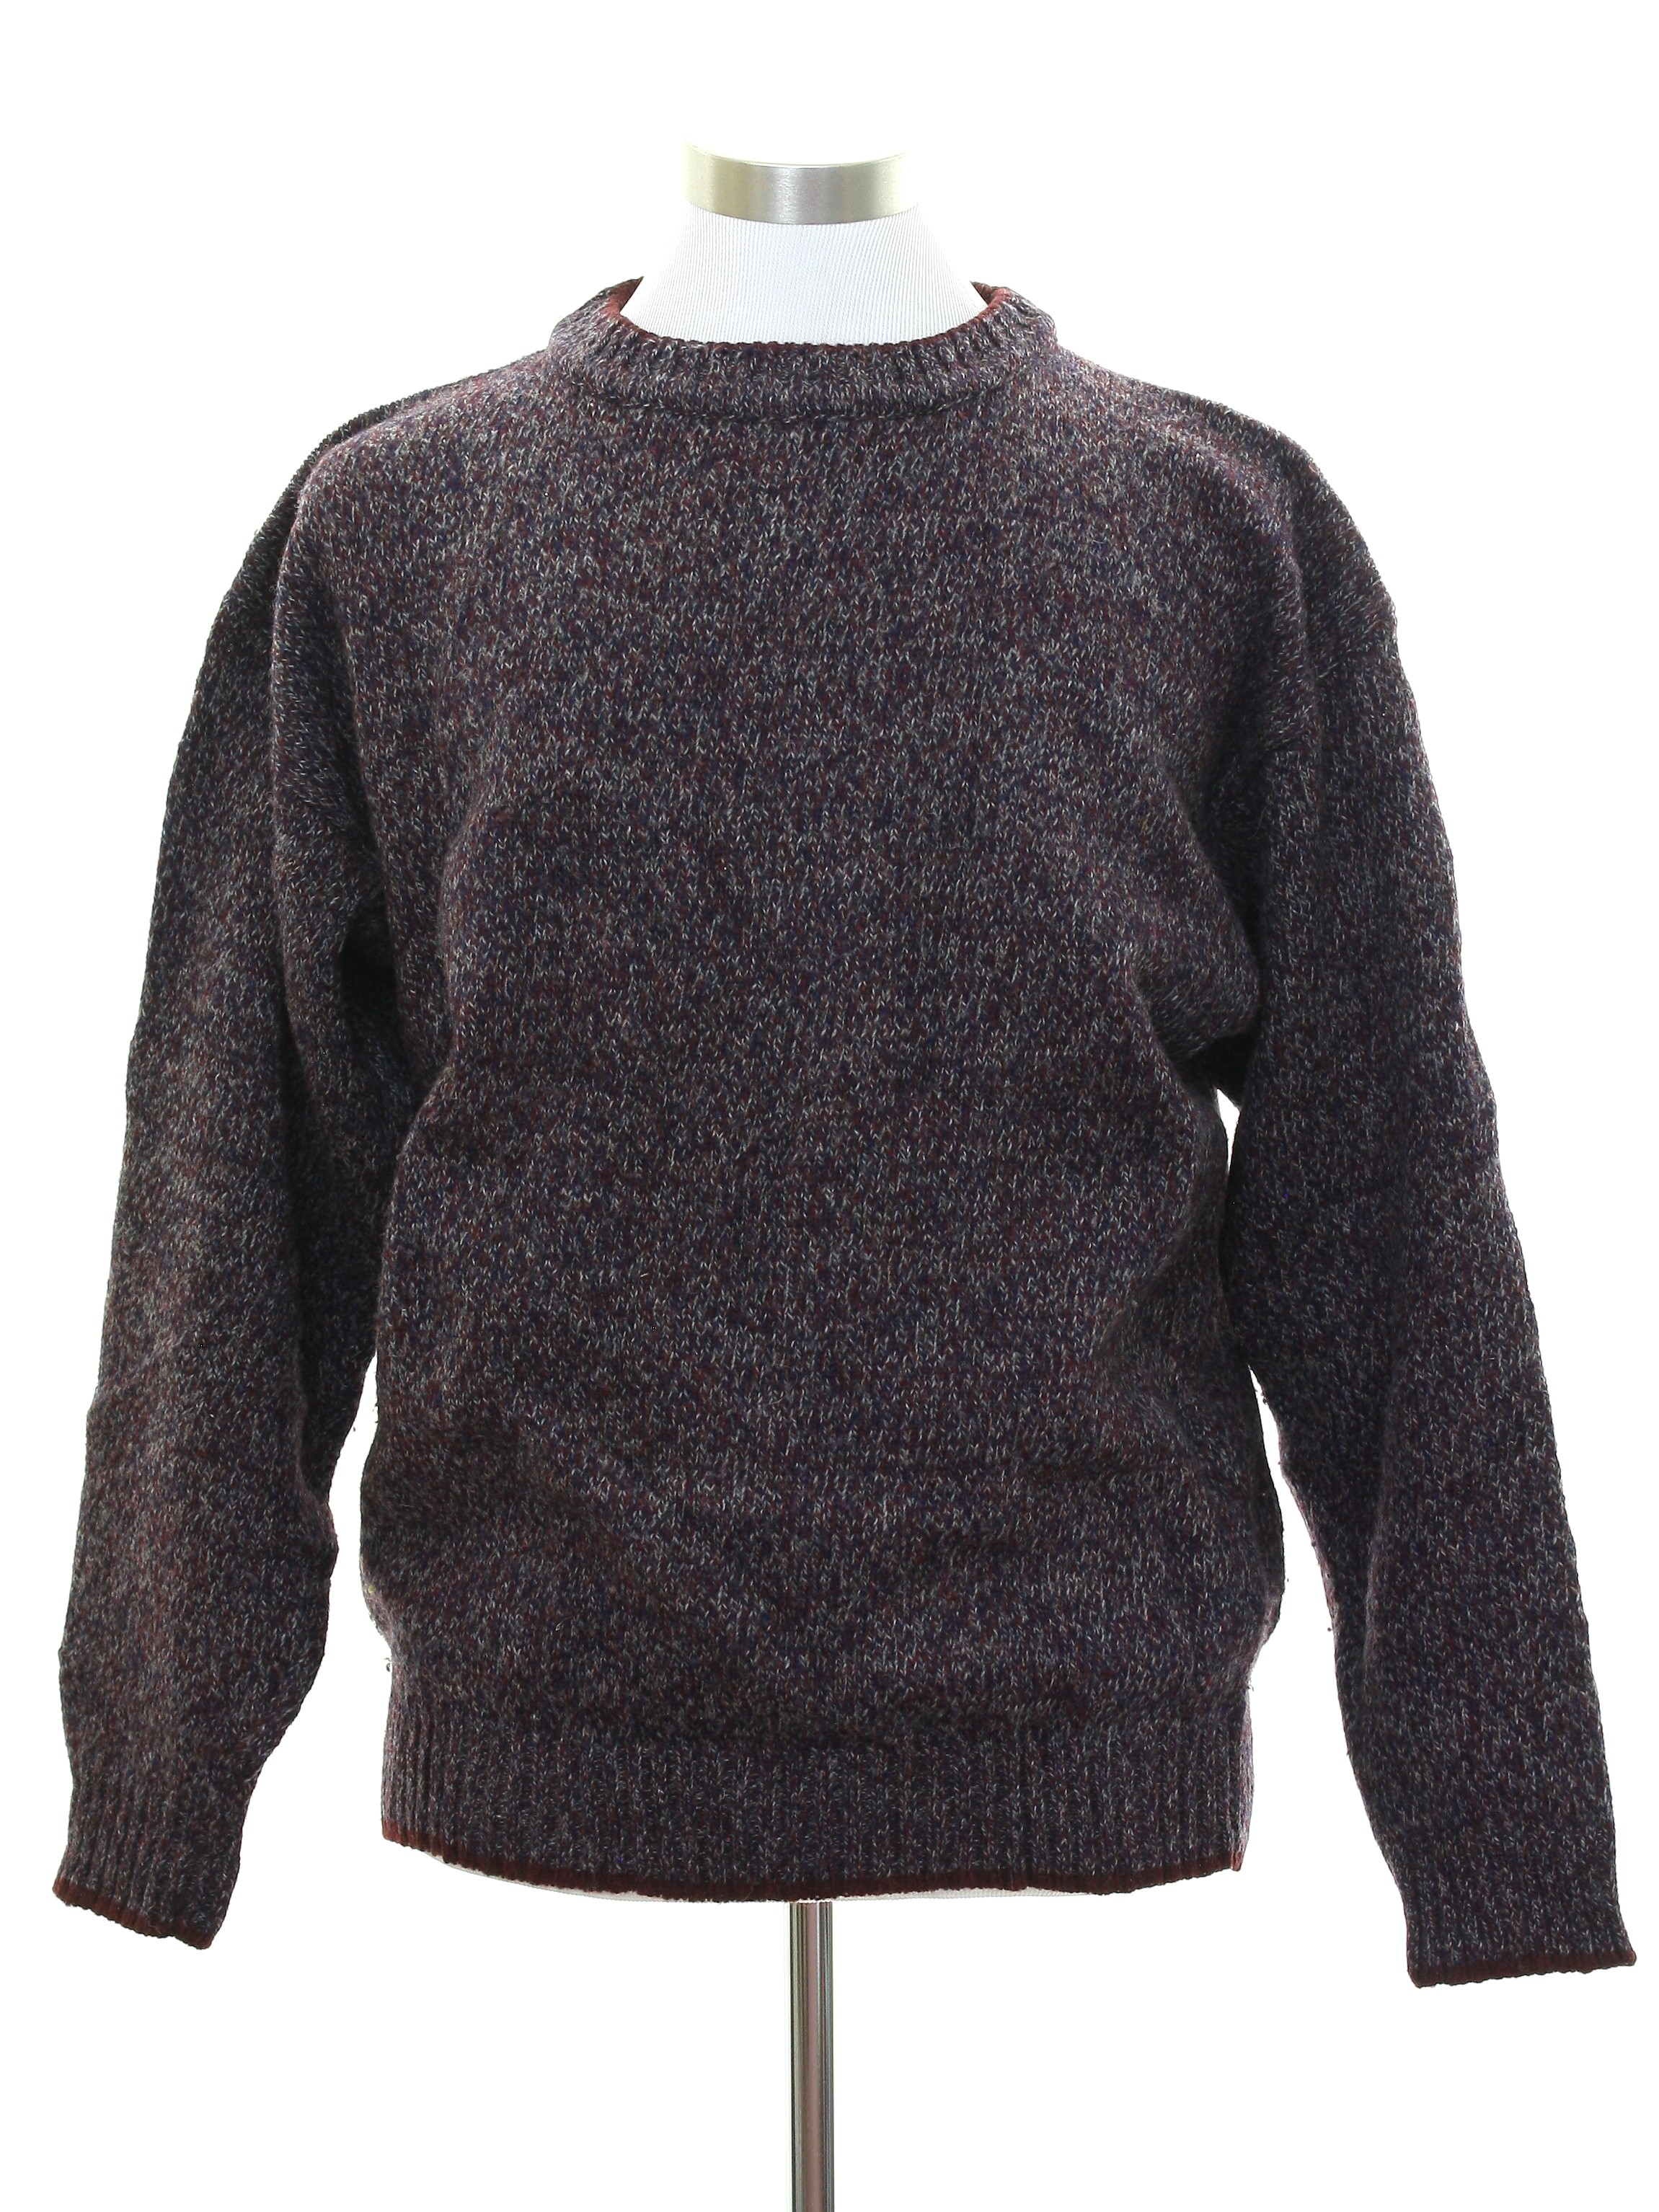 Vintage 90s Sweater: Early 90s -Woolrich- Mens hazy plum purple ...